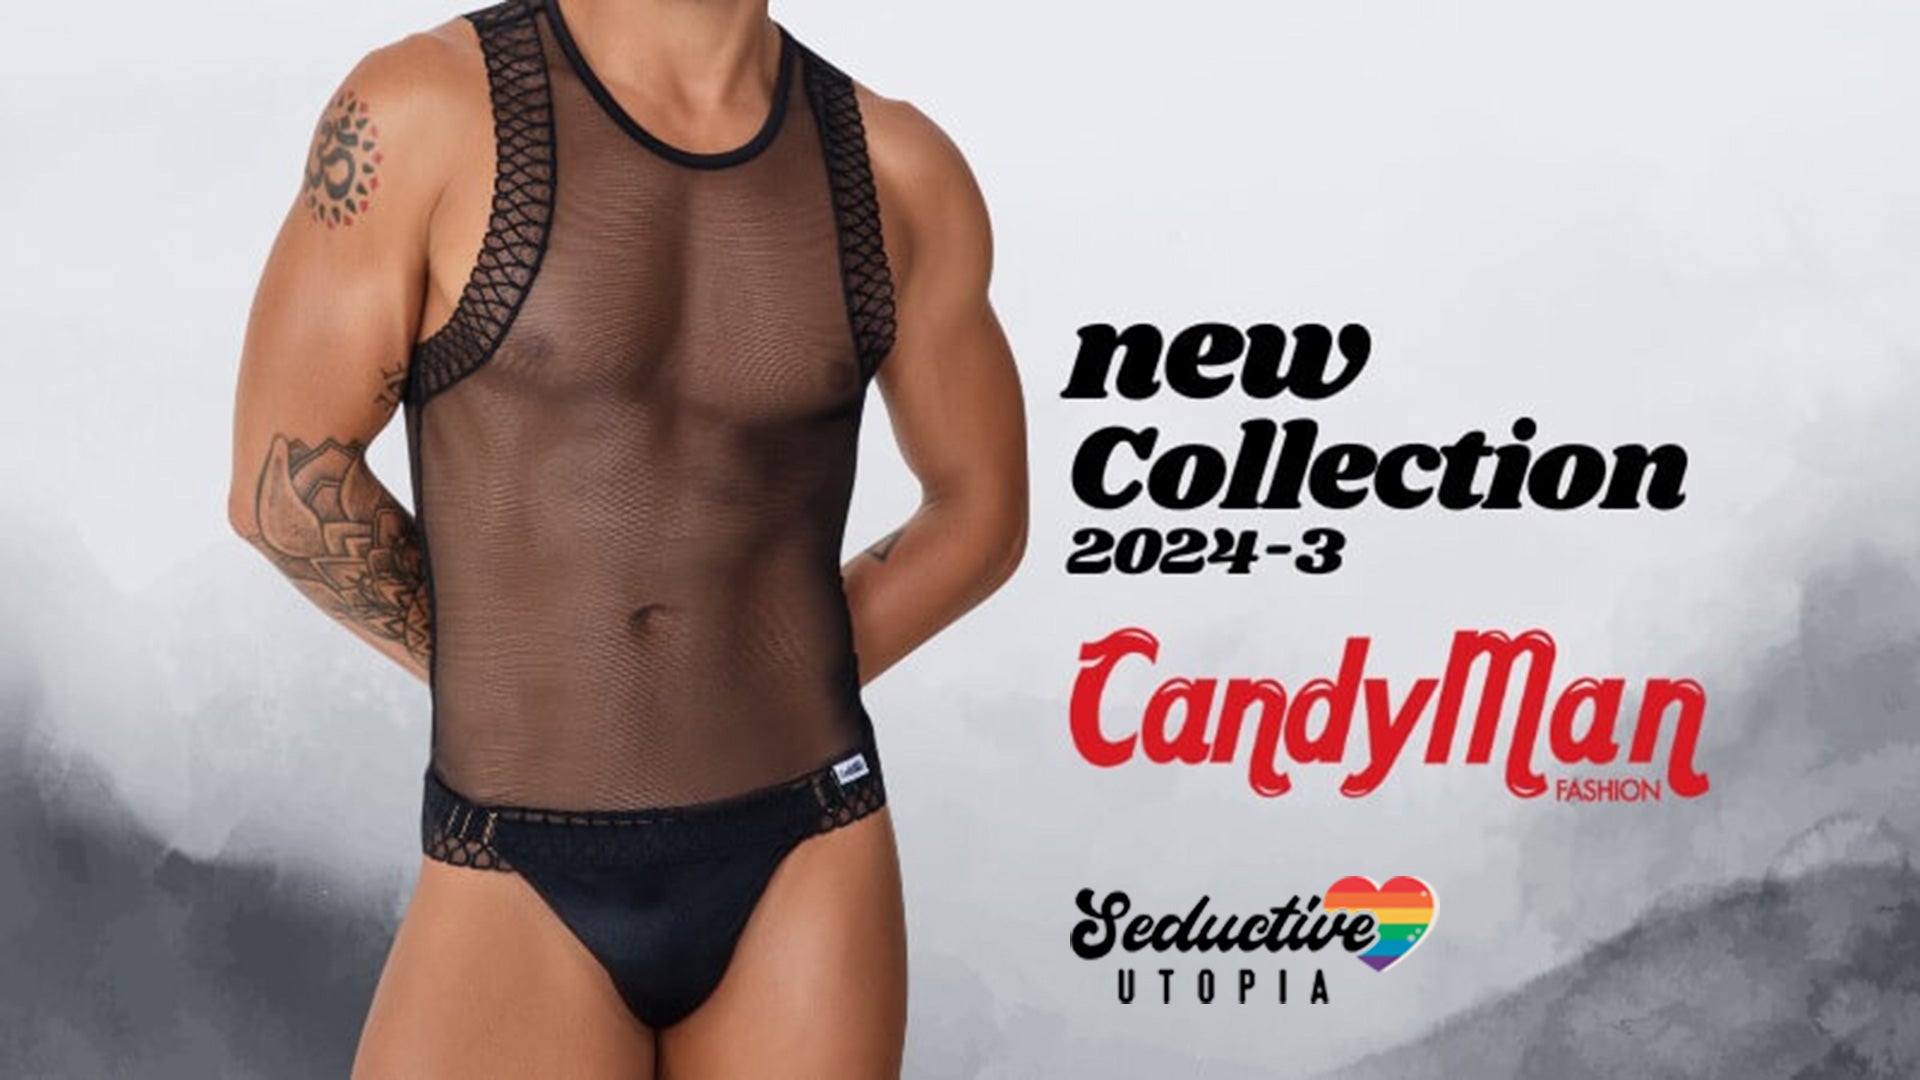 Load video: CandyMan 2024-3 Underwear